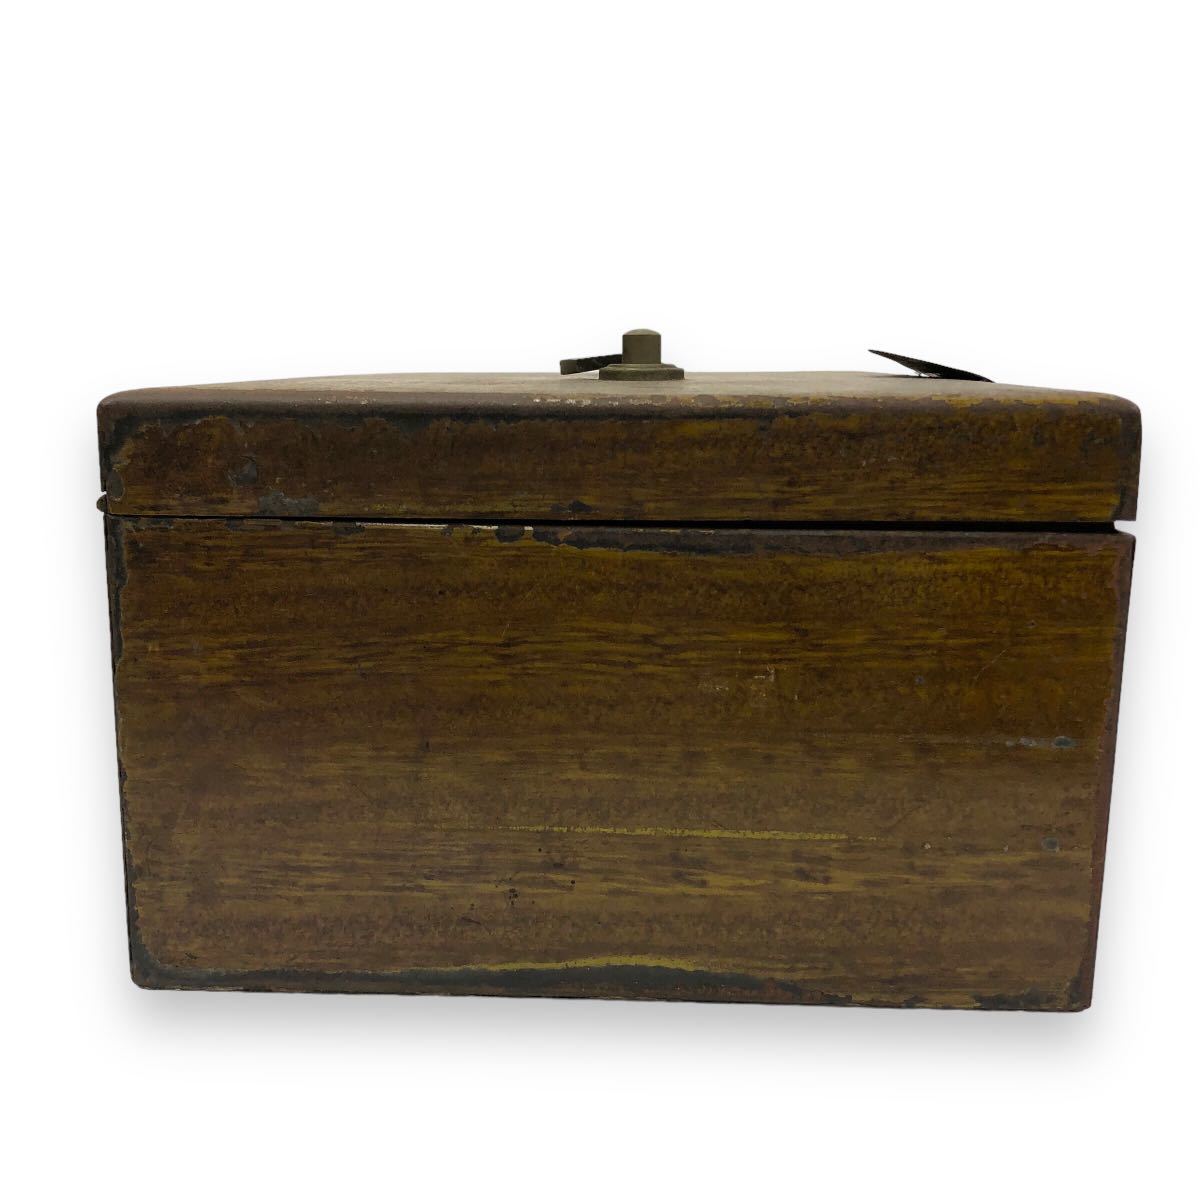 misono made (MISONO HAND SAFE) dial type iron made handbag safe sen box antique Showa Retro 